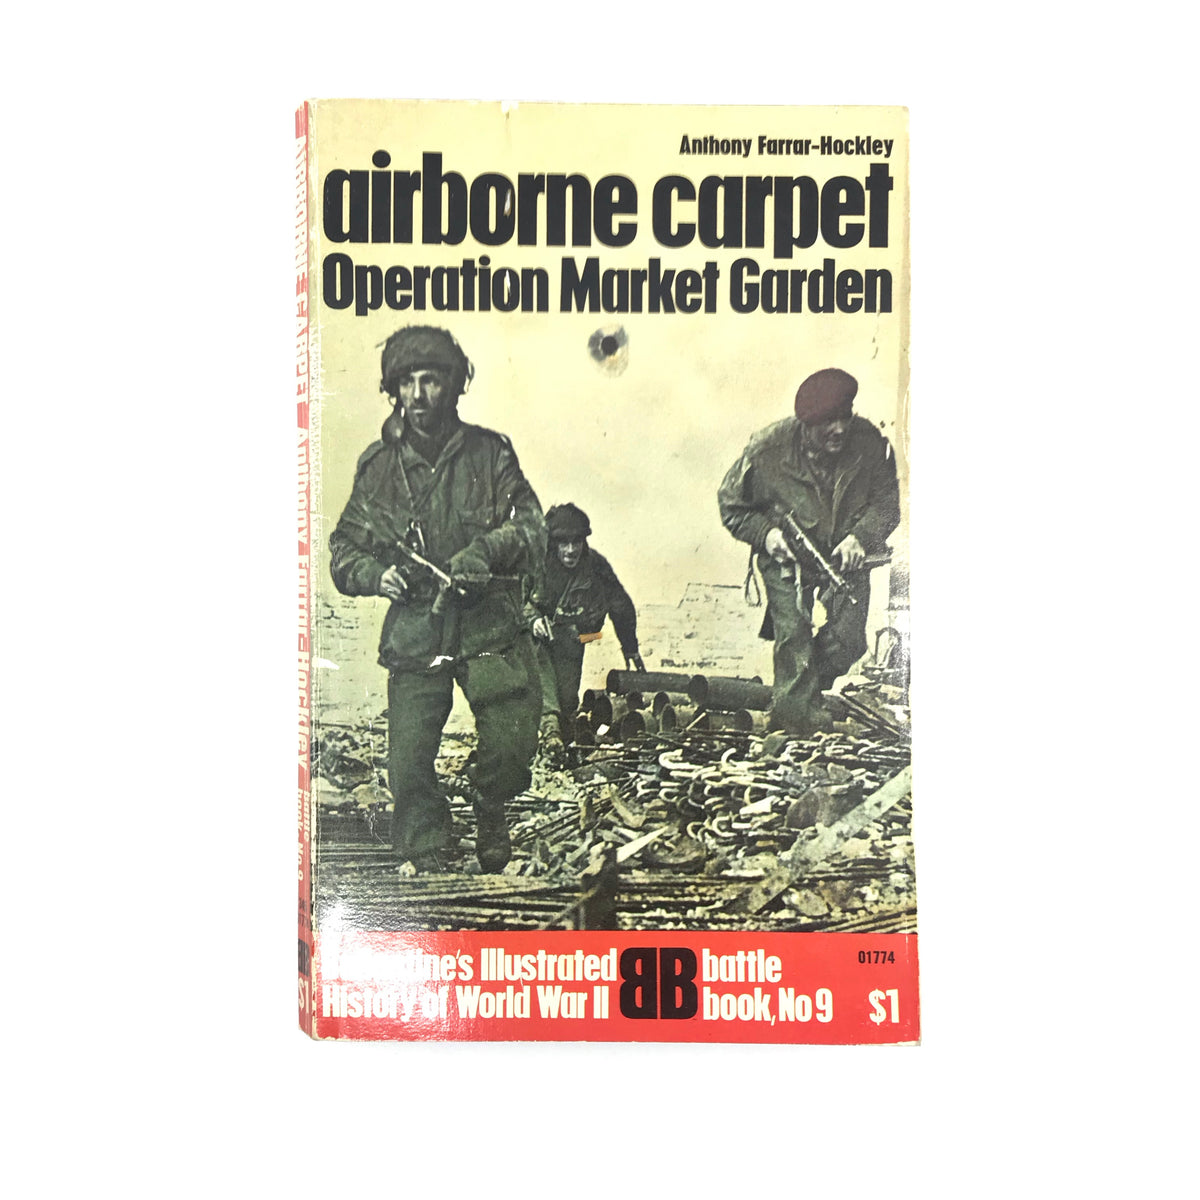 Ballantine&#39;s Illustrated History of World War II:Battle Book No9 - Airborne Carpet Operation Market Garden (Anthonly Farrar-Hockley)